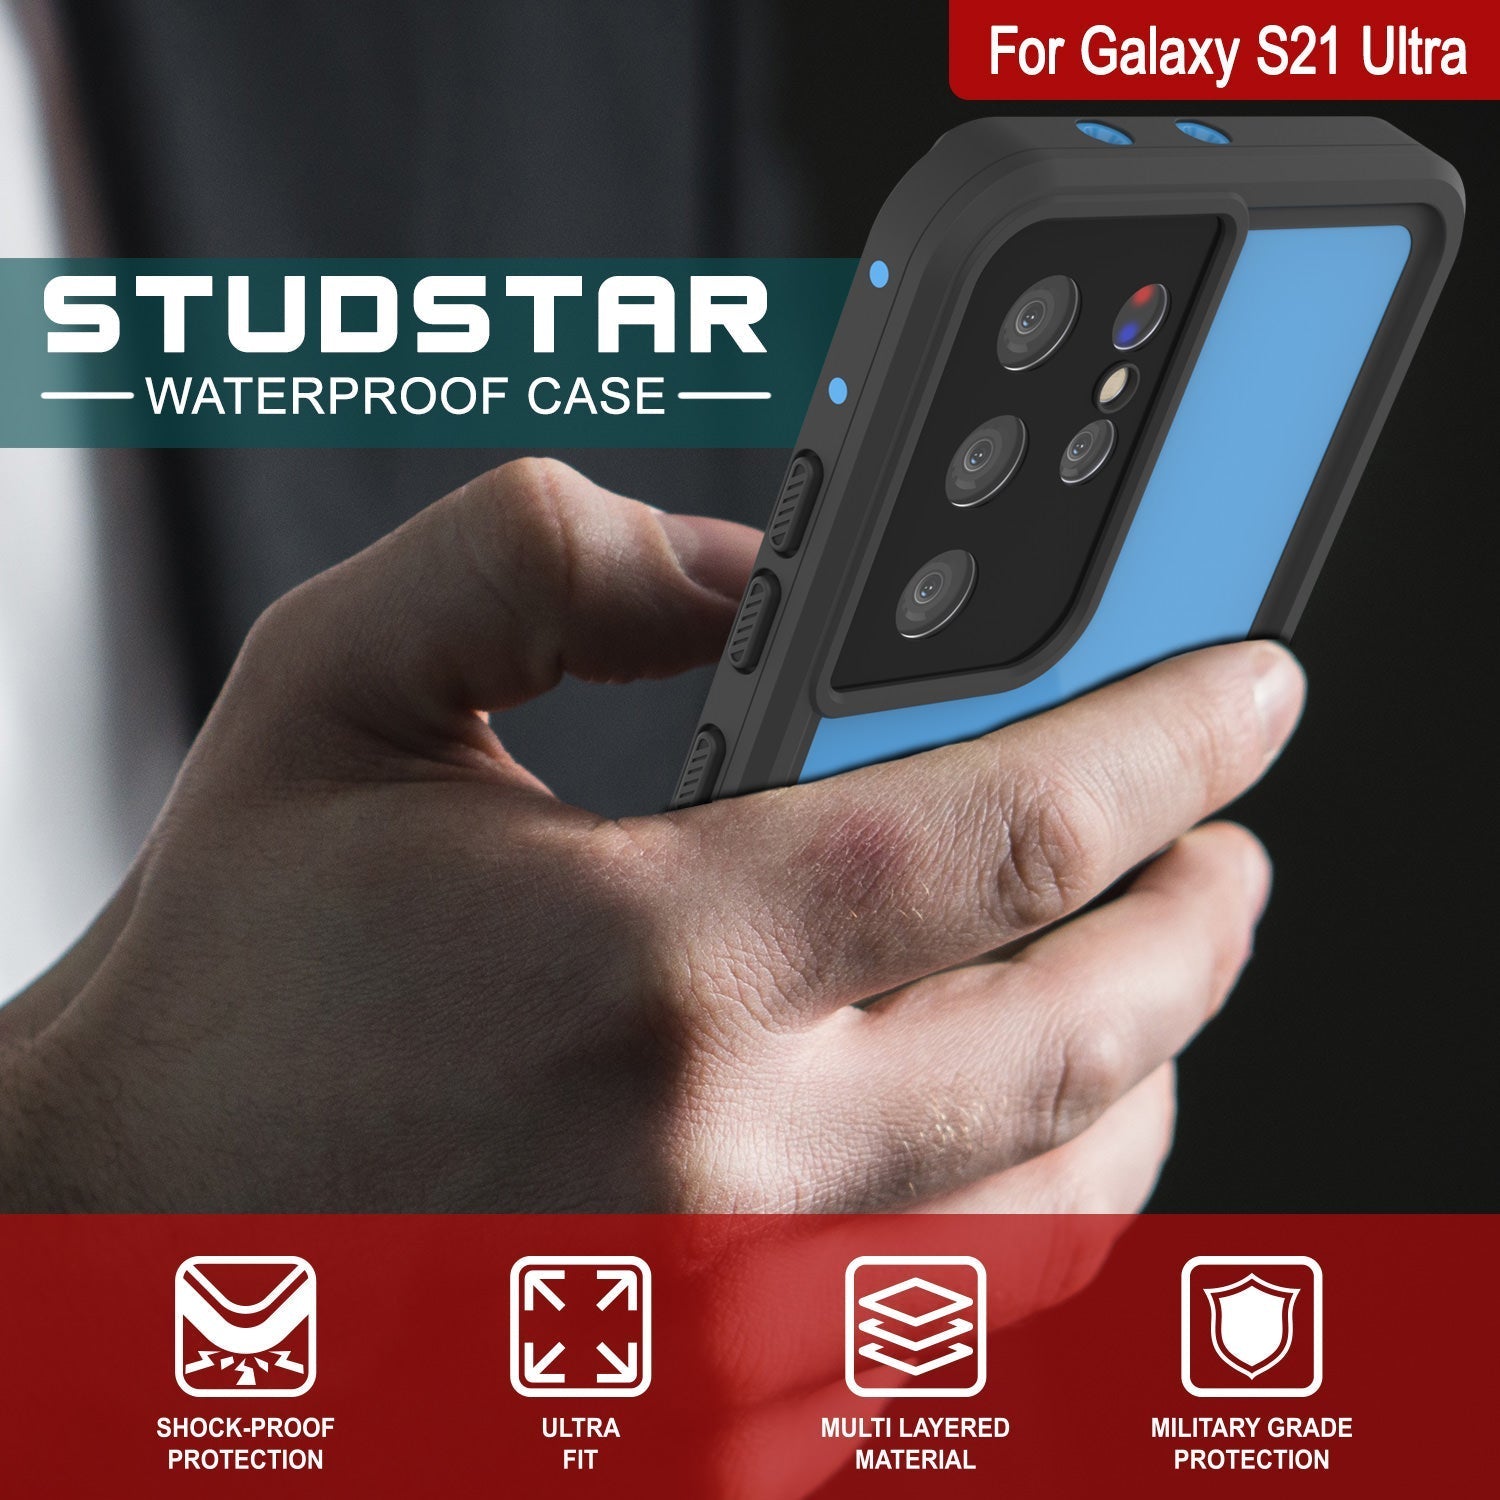 Galaxy S22 Ultra Waterproof Case PunkCase StudStar Light Blue Thin 6.6ft Underwater IP68 ShockProof